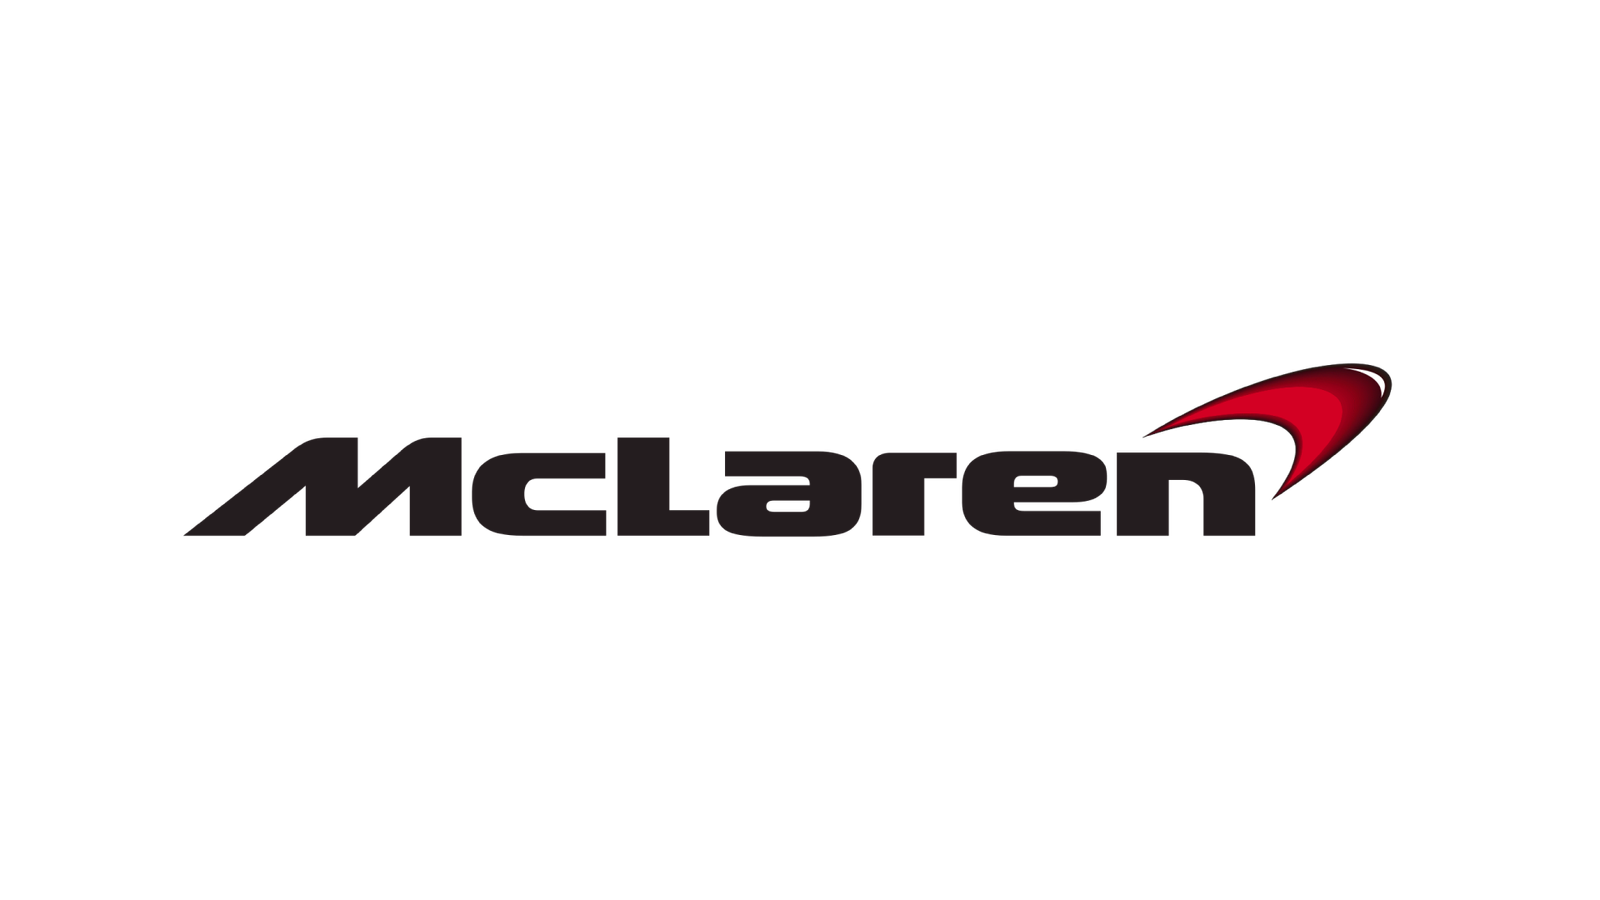 Lewis may quit McLaren